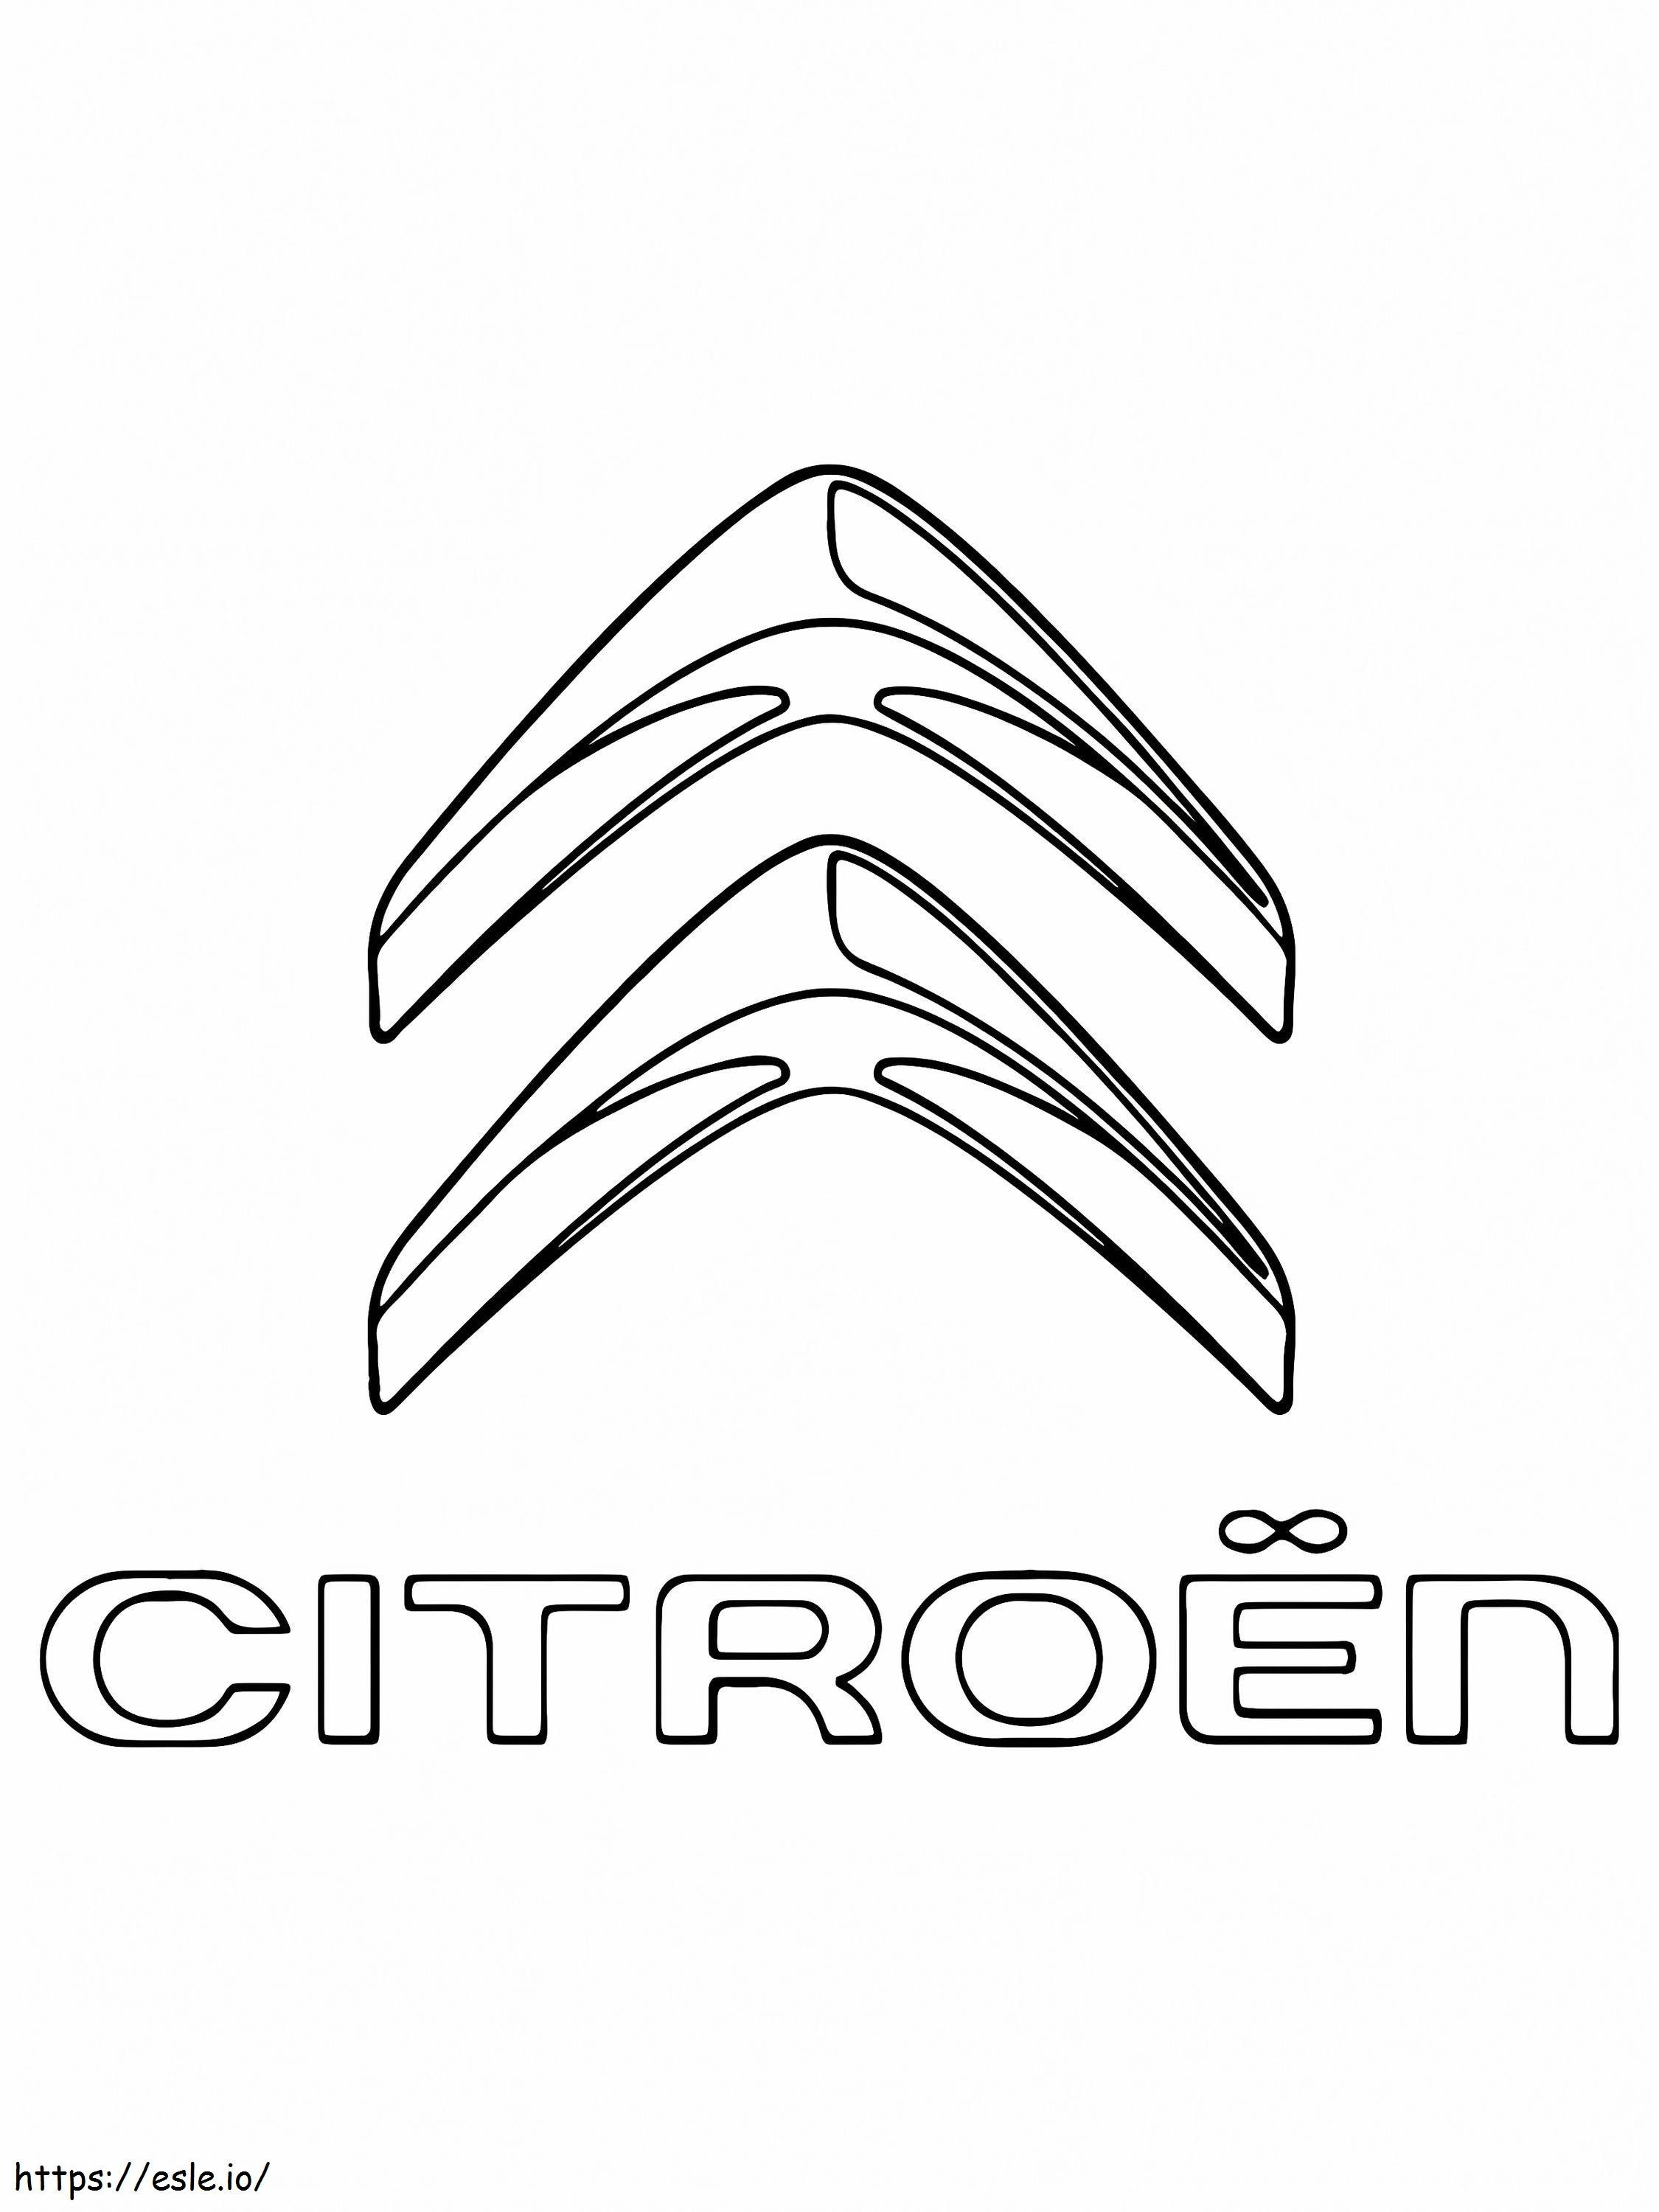 Logo samochodu Citroen kolorowanka